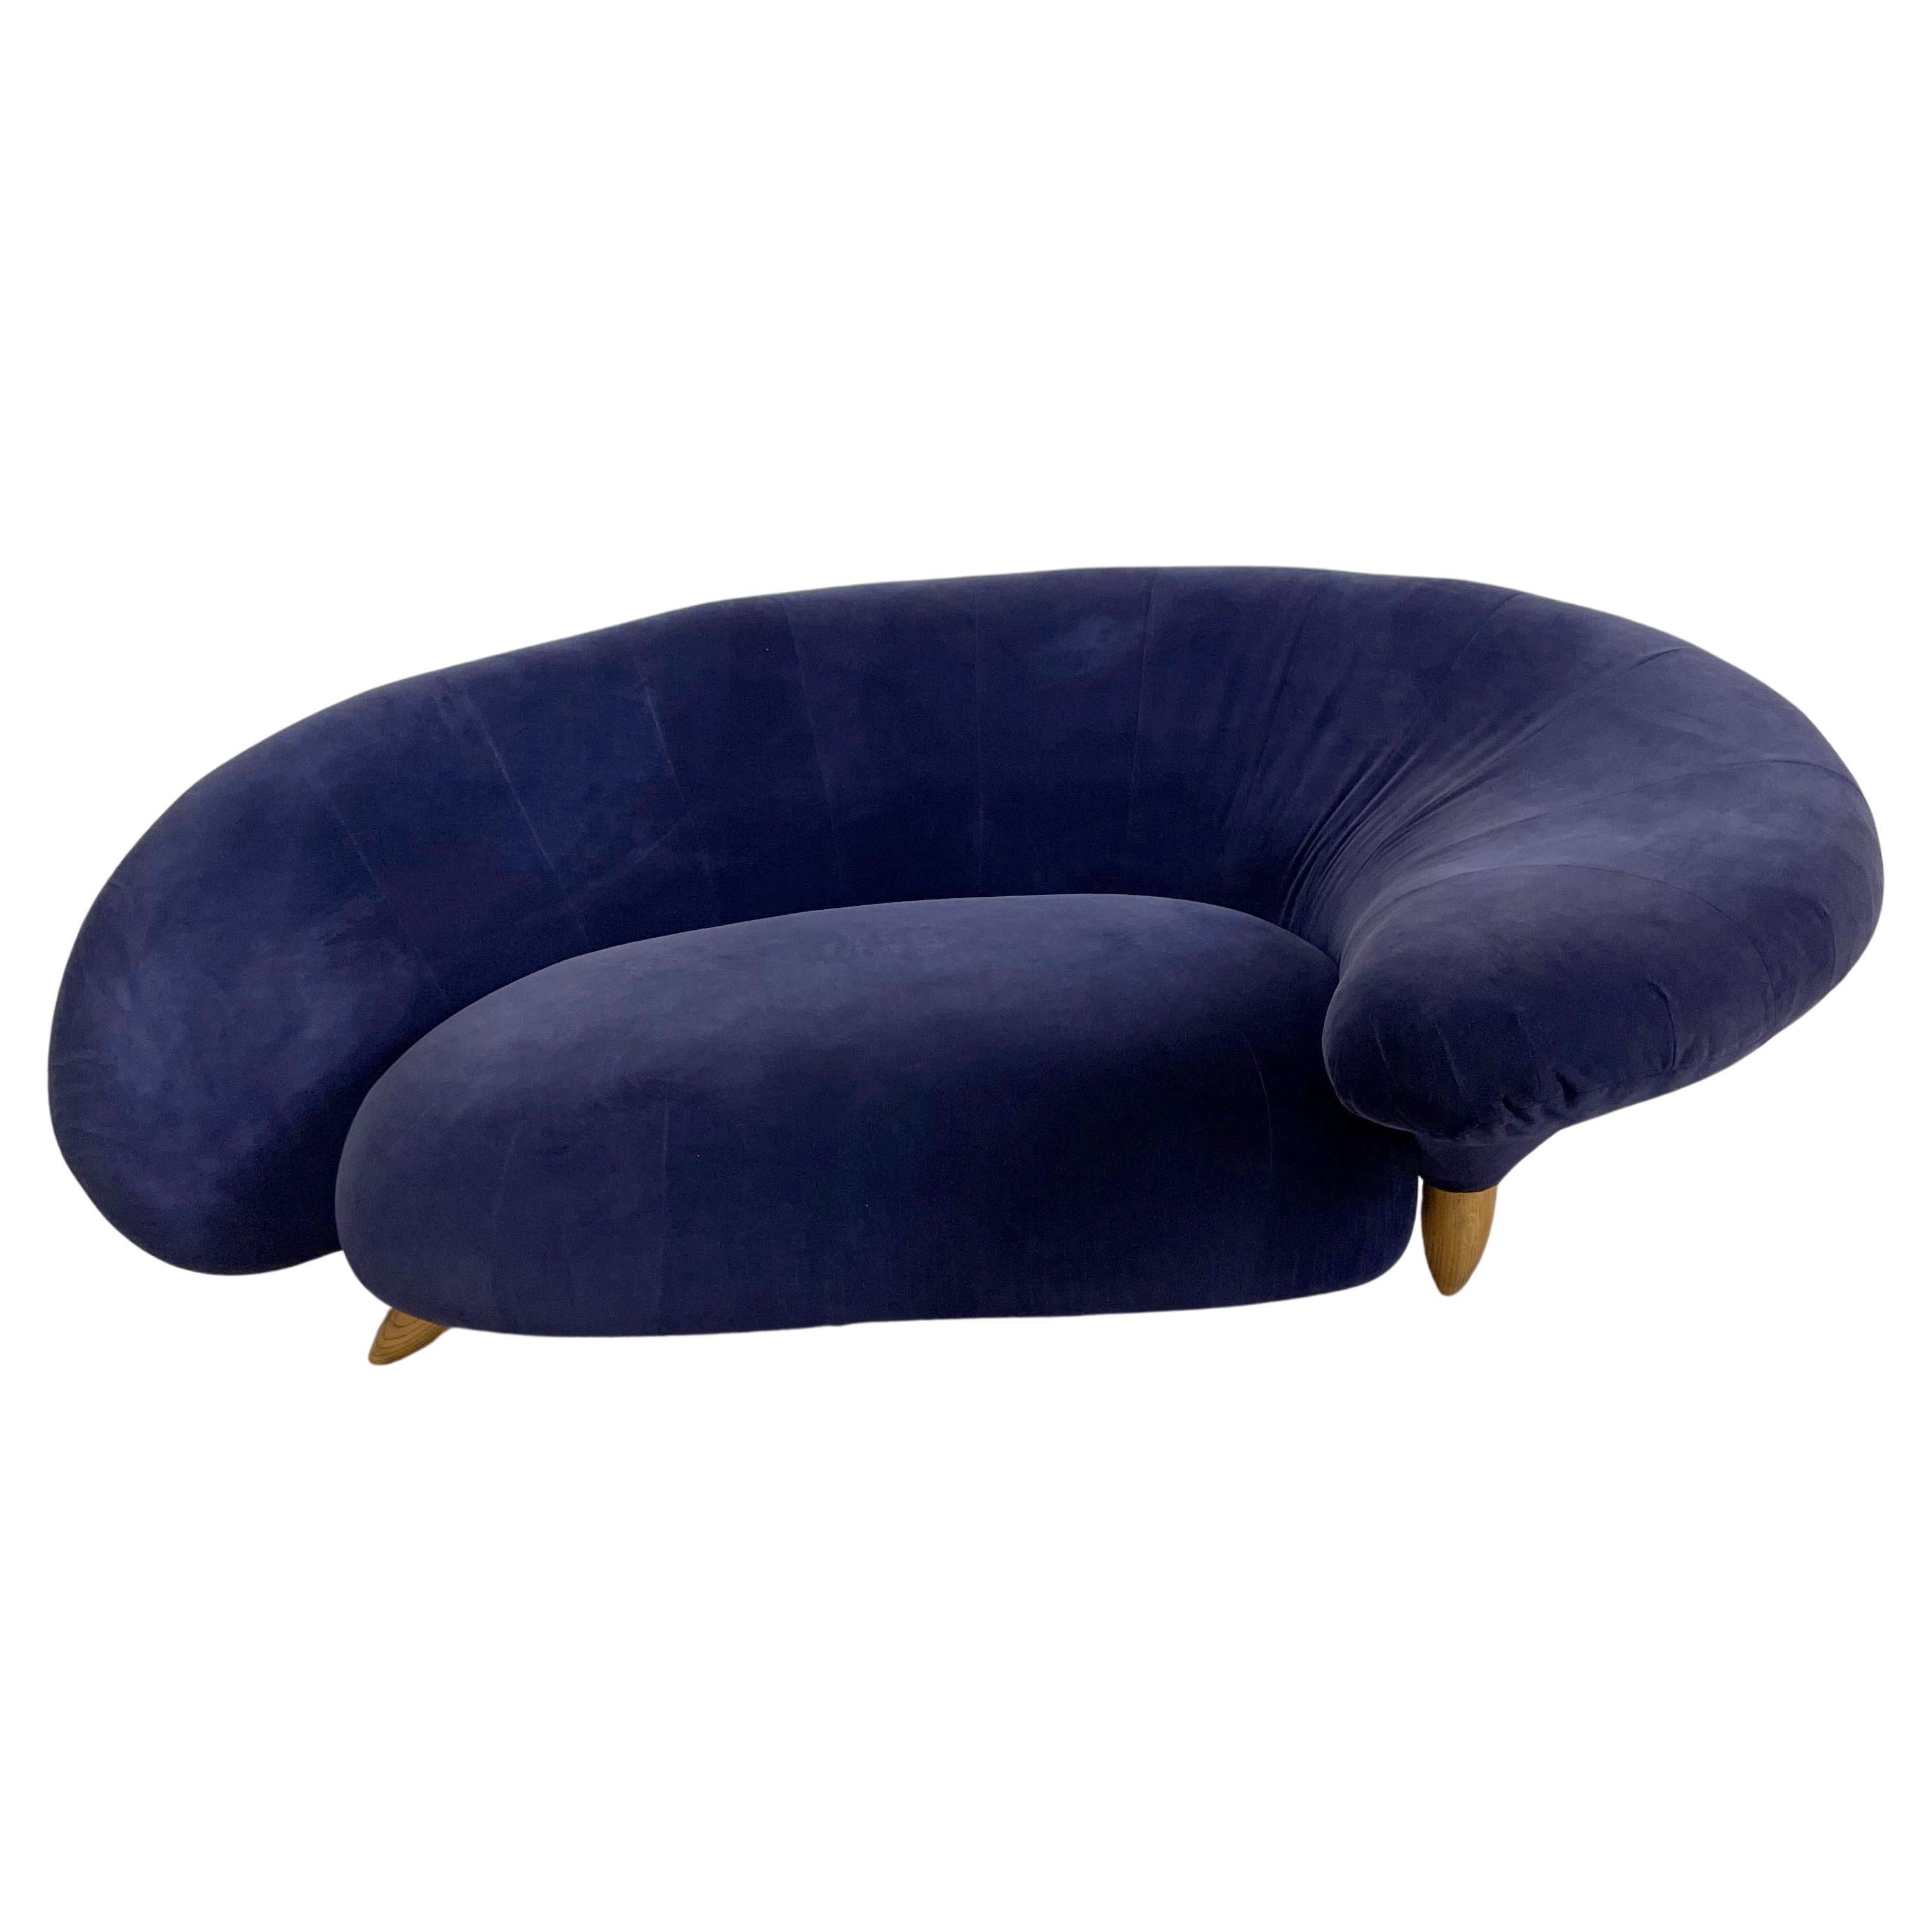 Vintage 20th Century Modern Serpentine Curved Velvet Sofa in Navy Blue Color